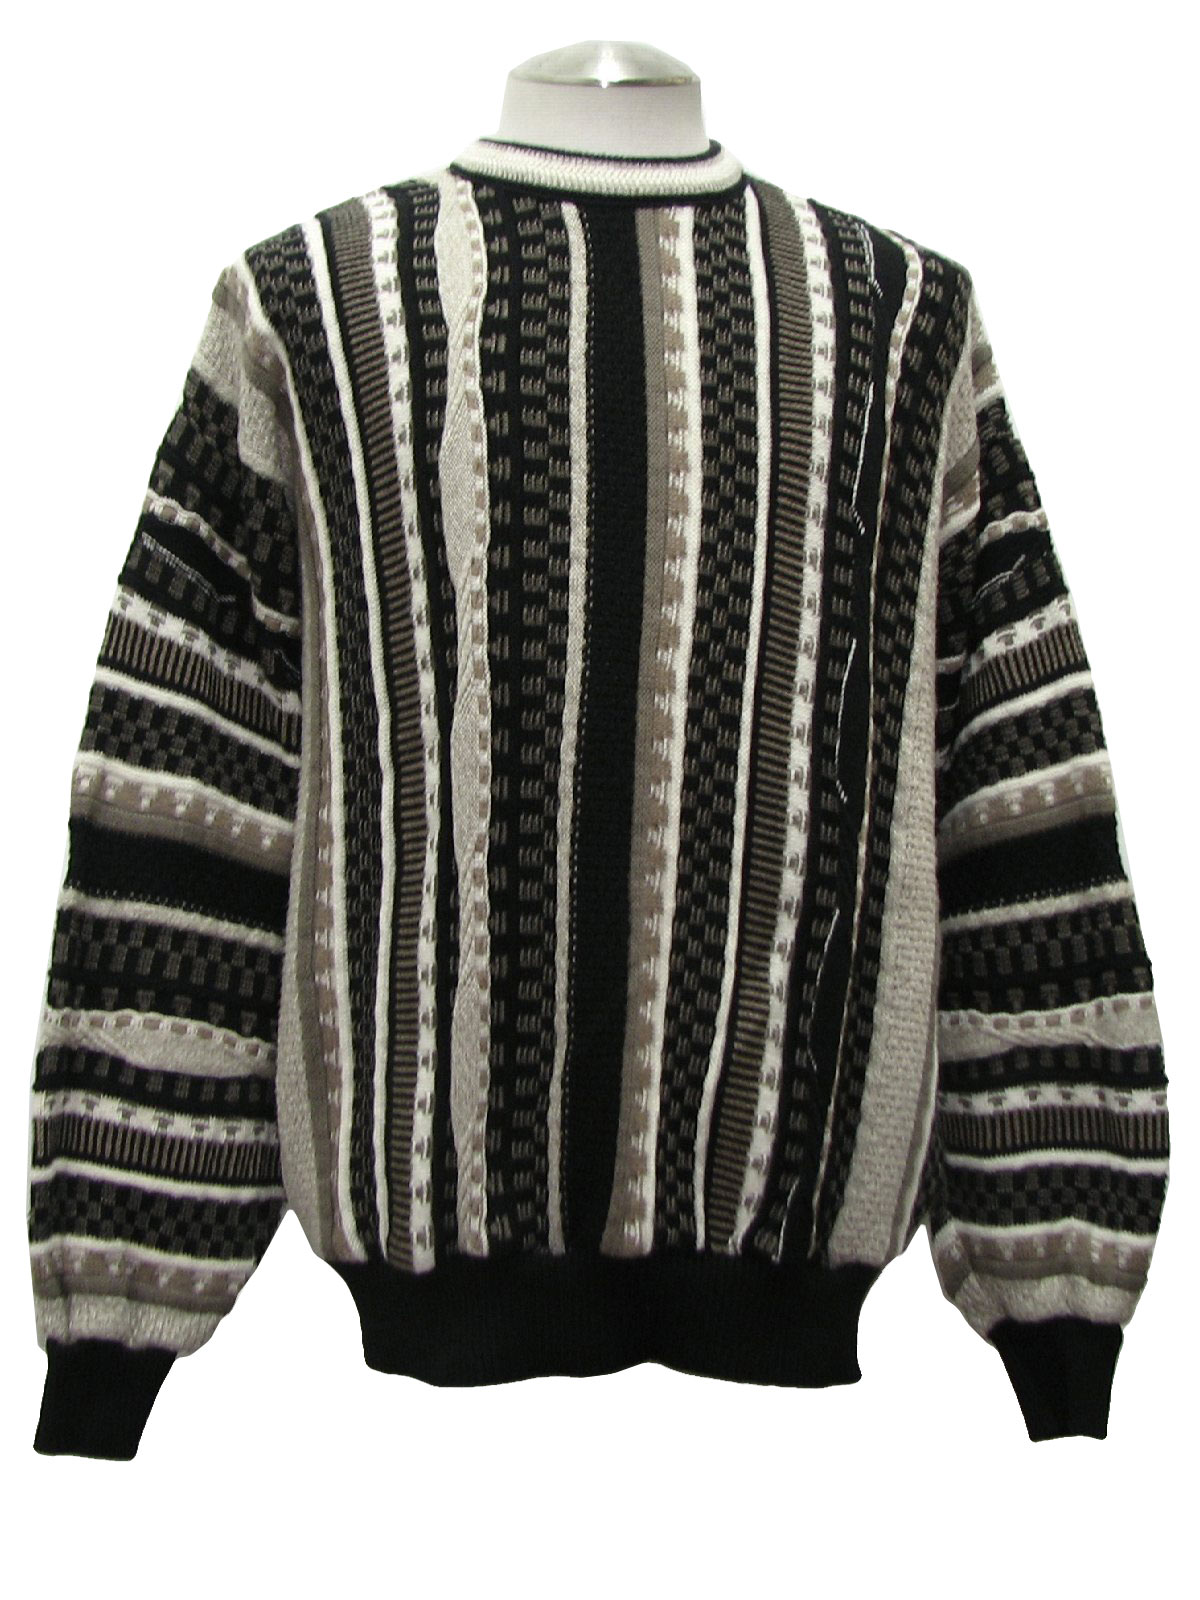 1980's Retro Sweater: 80s -Tundra- Mens white, tan, and black